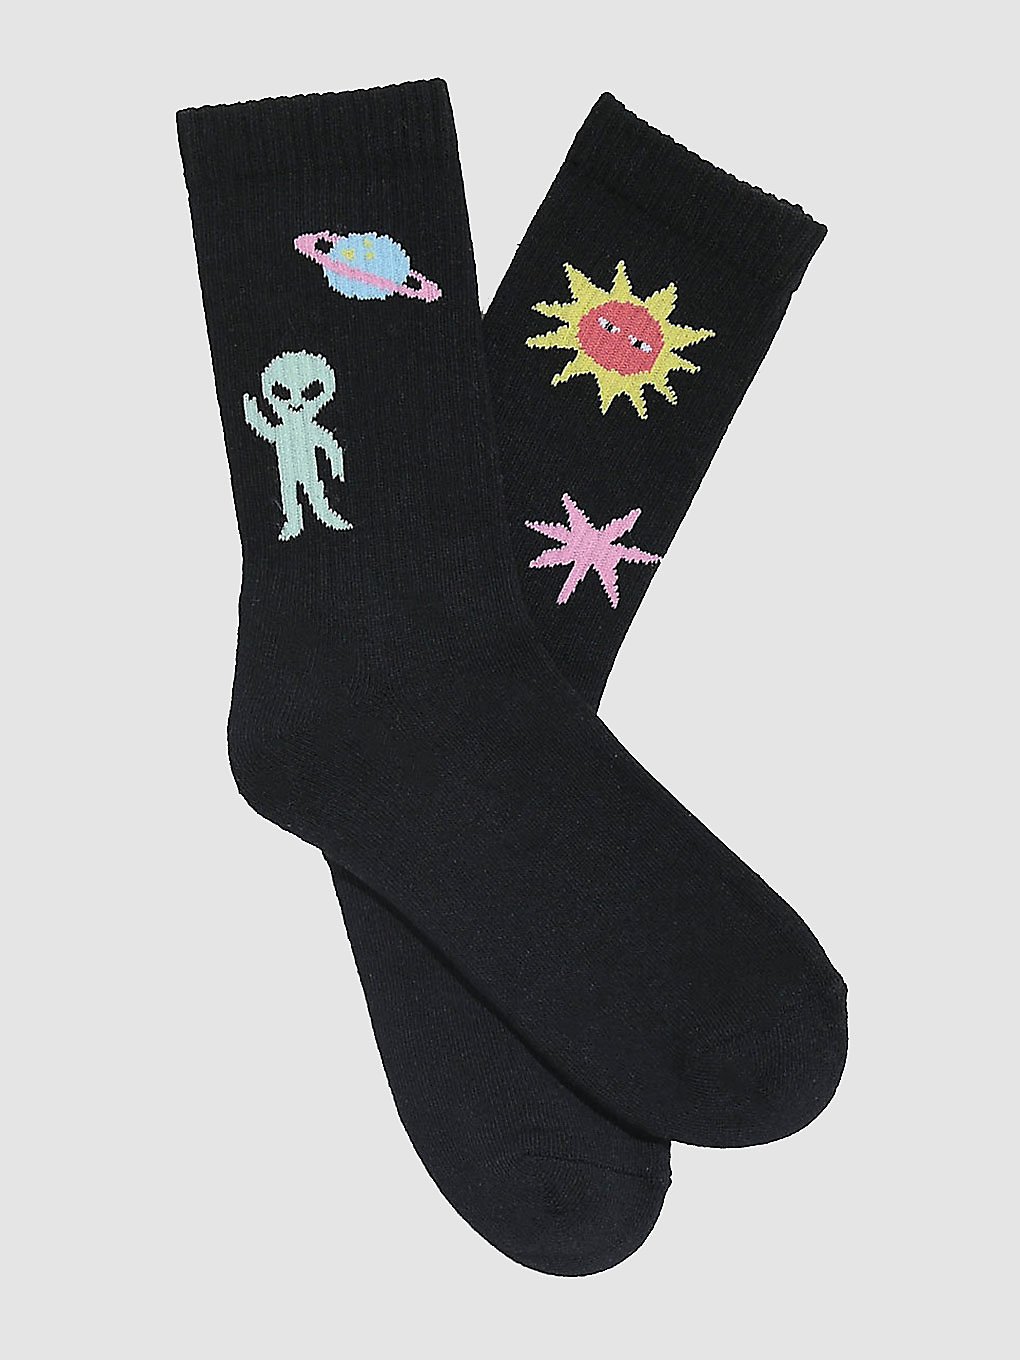 A.Lab Outer Limits Crew Socken black kaufen